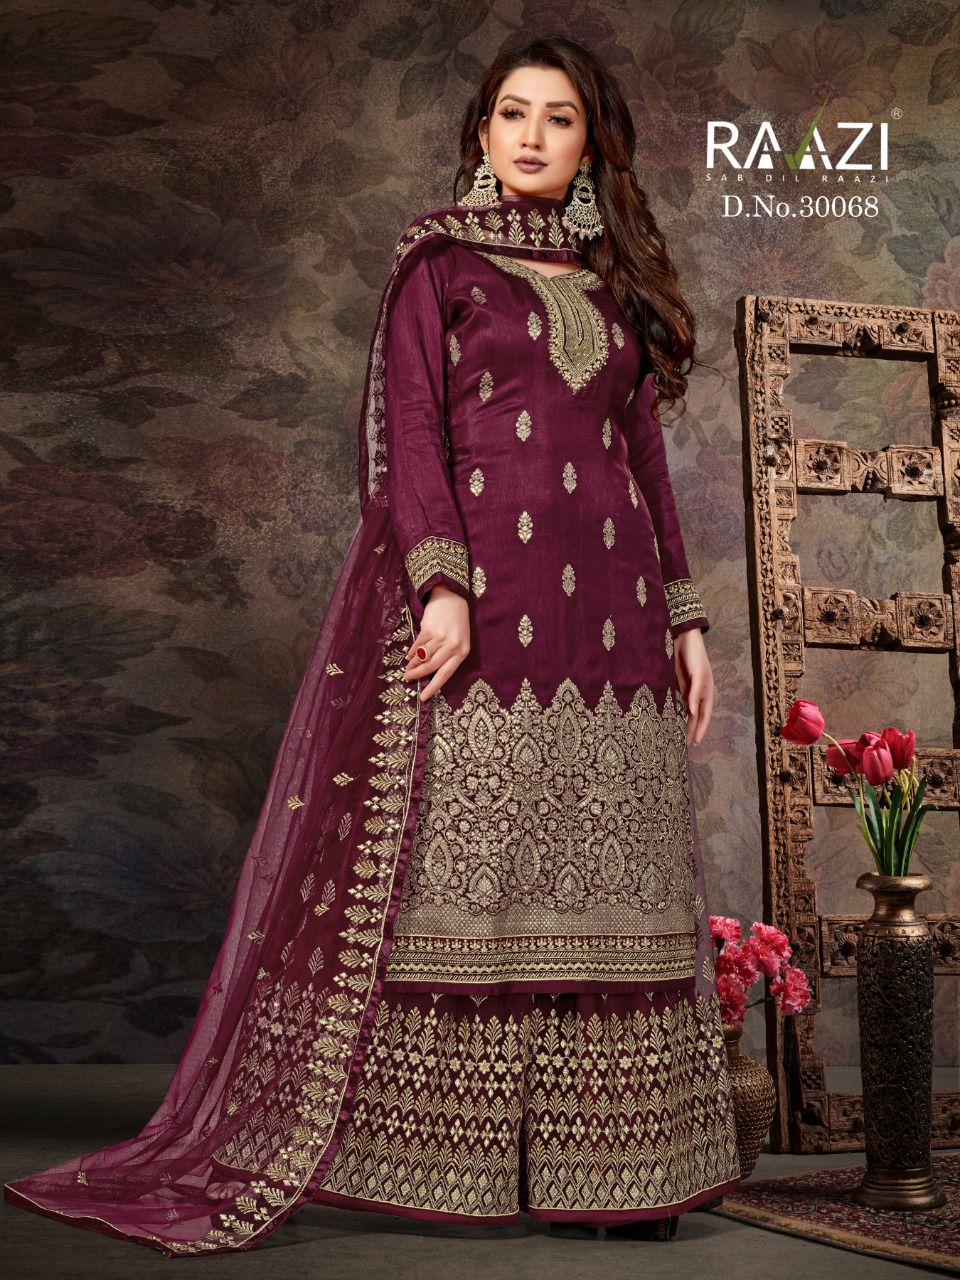 Raazi Presents Dilbaro Dno 30068 - 30073 Series Designer Pakistani Shara Suit At Wholesale Price